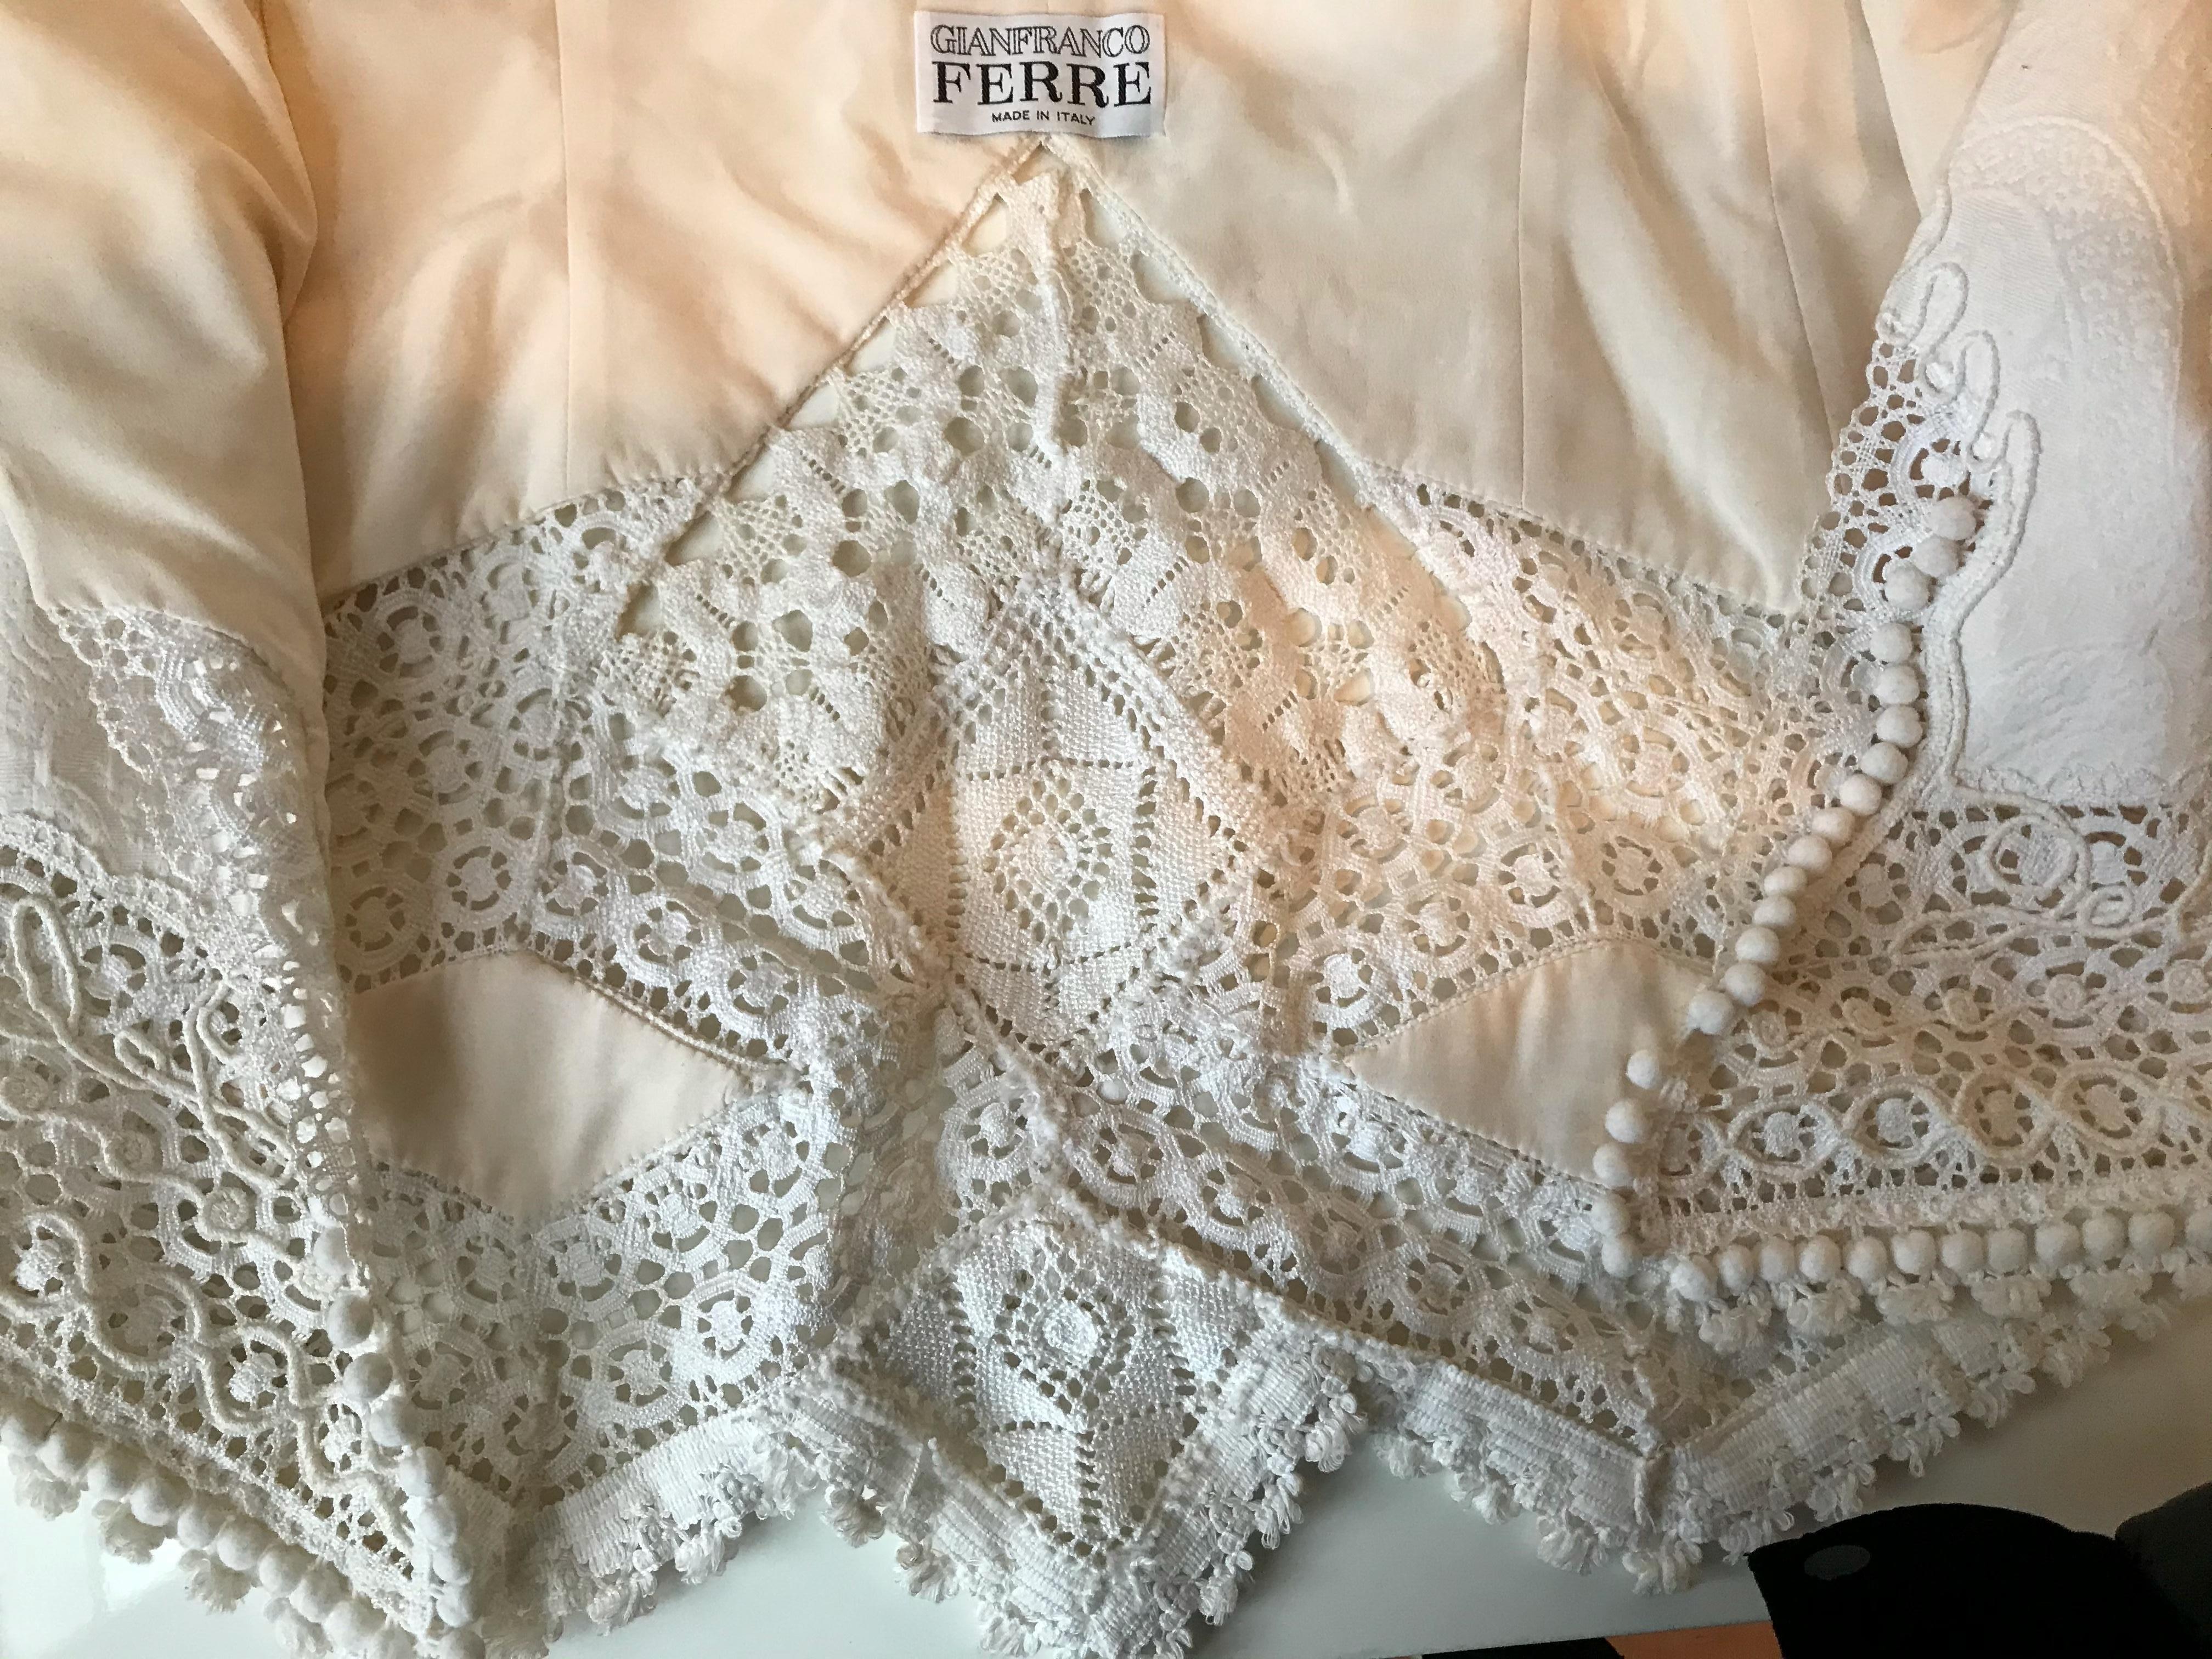 Gianfranco Ferre Brocade Crochet Lace & Pom Pom Detail Jacket and Skirt Ensemble For Sale 12